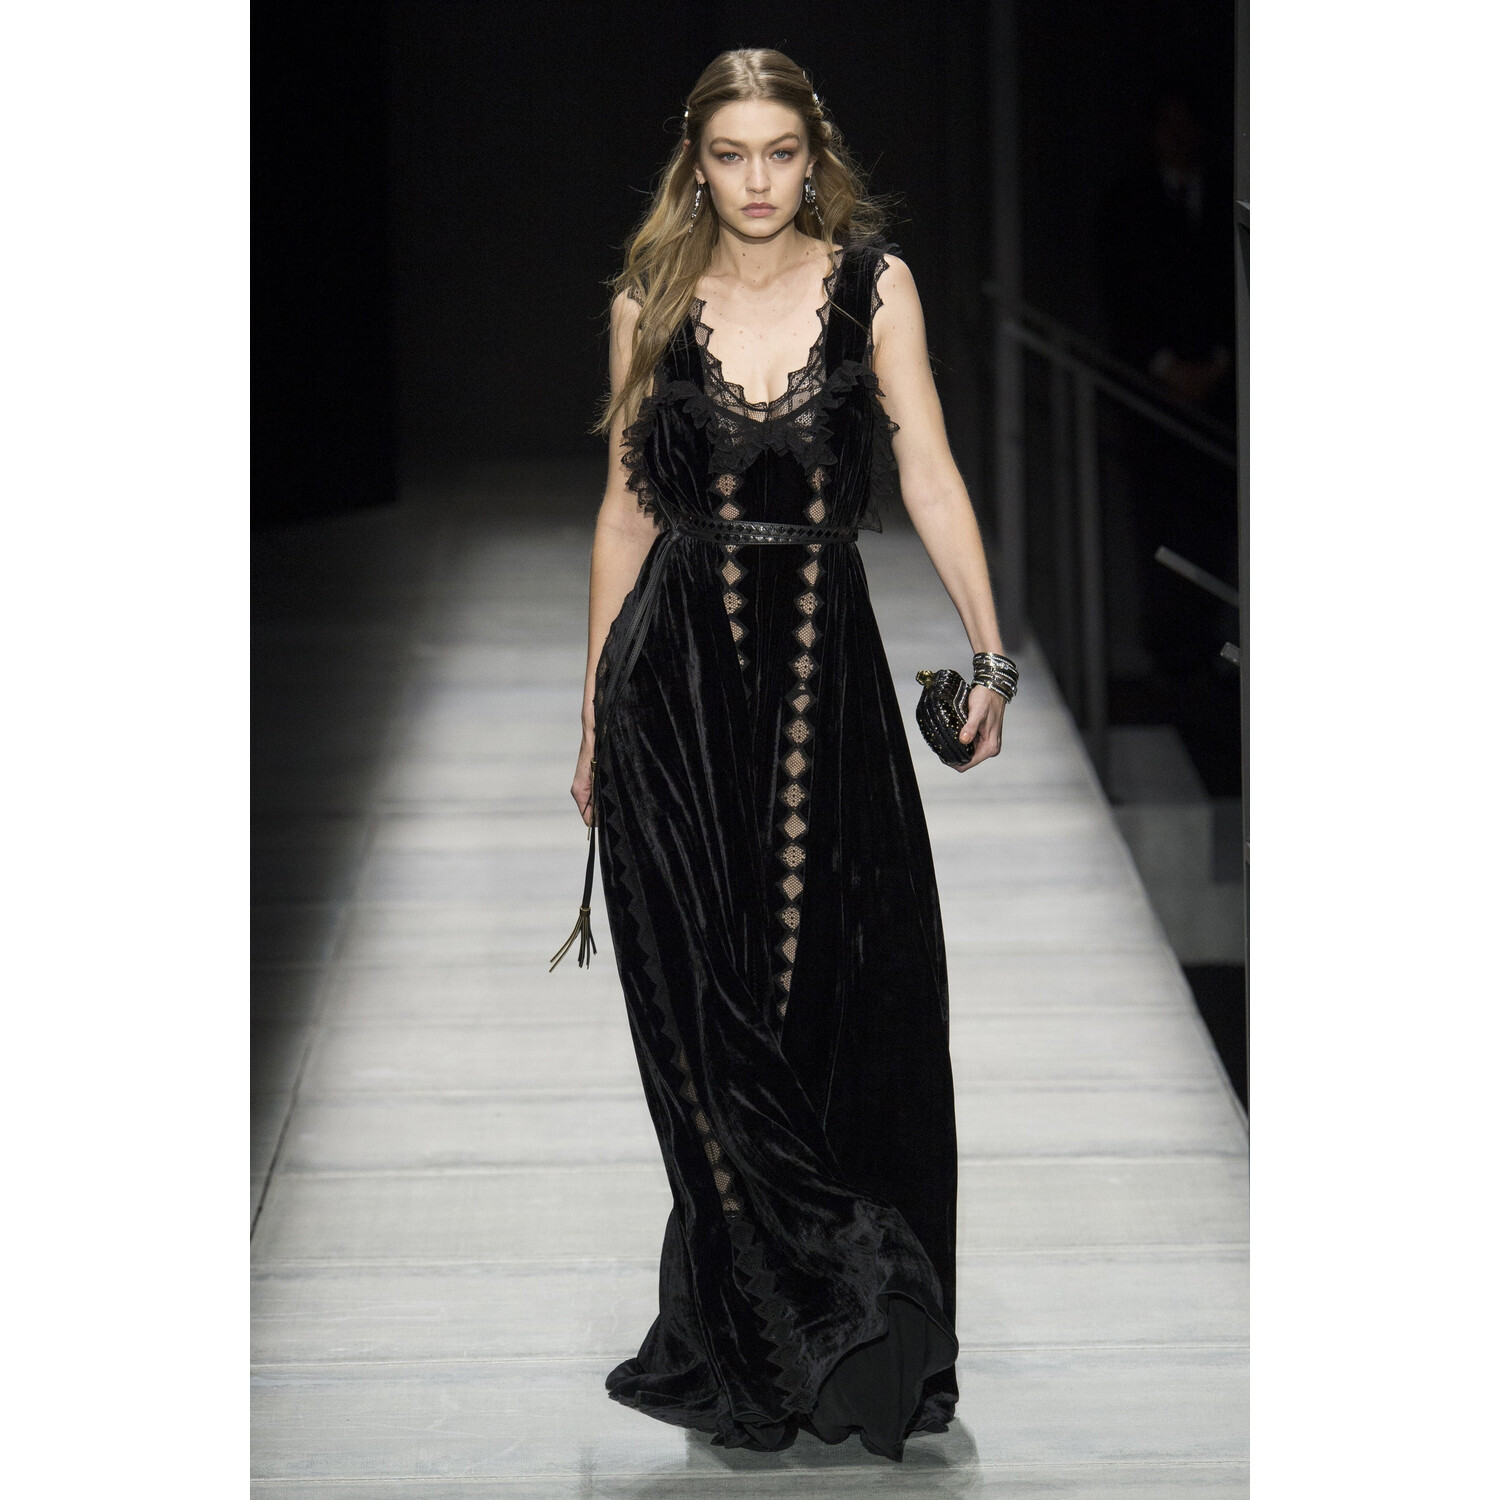 Фото Bottega Veneta Fall 2018 Ready-to-Wear Боттега Венета осень зима 2018 коллекция неделя моды в Нью Йорке Mainstyles